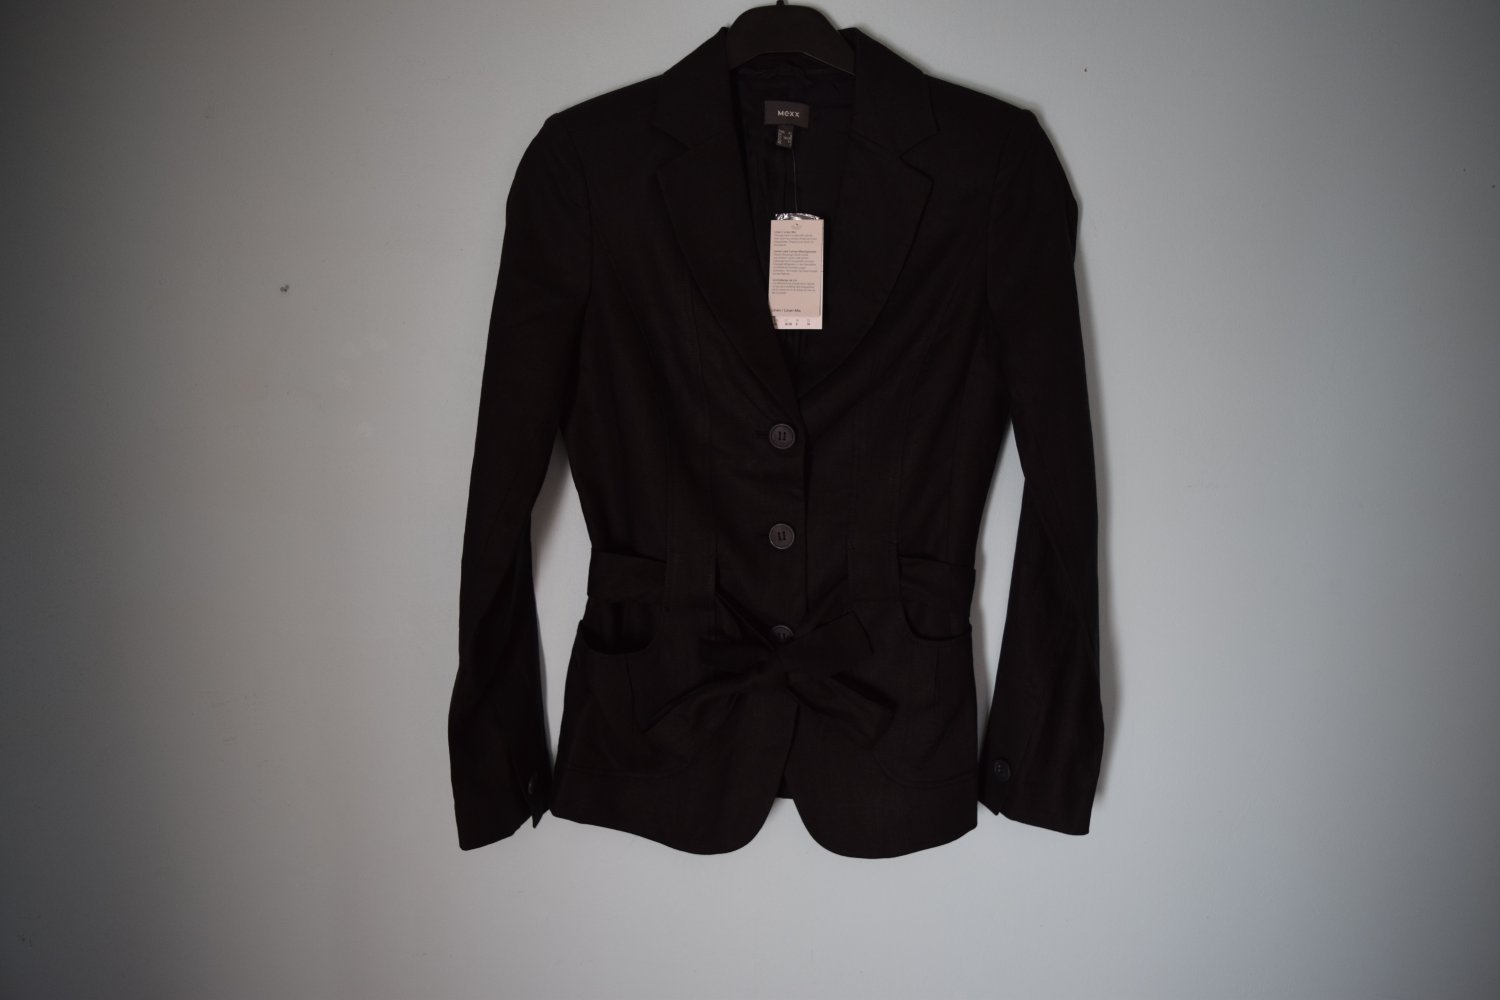 Mexx summer blazer jacket for women size US 4 UK 6